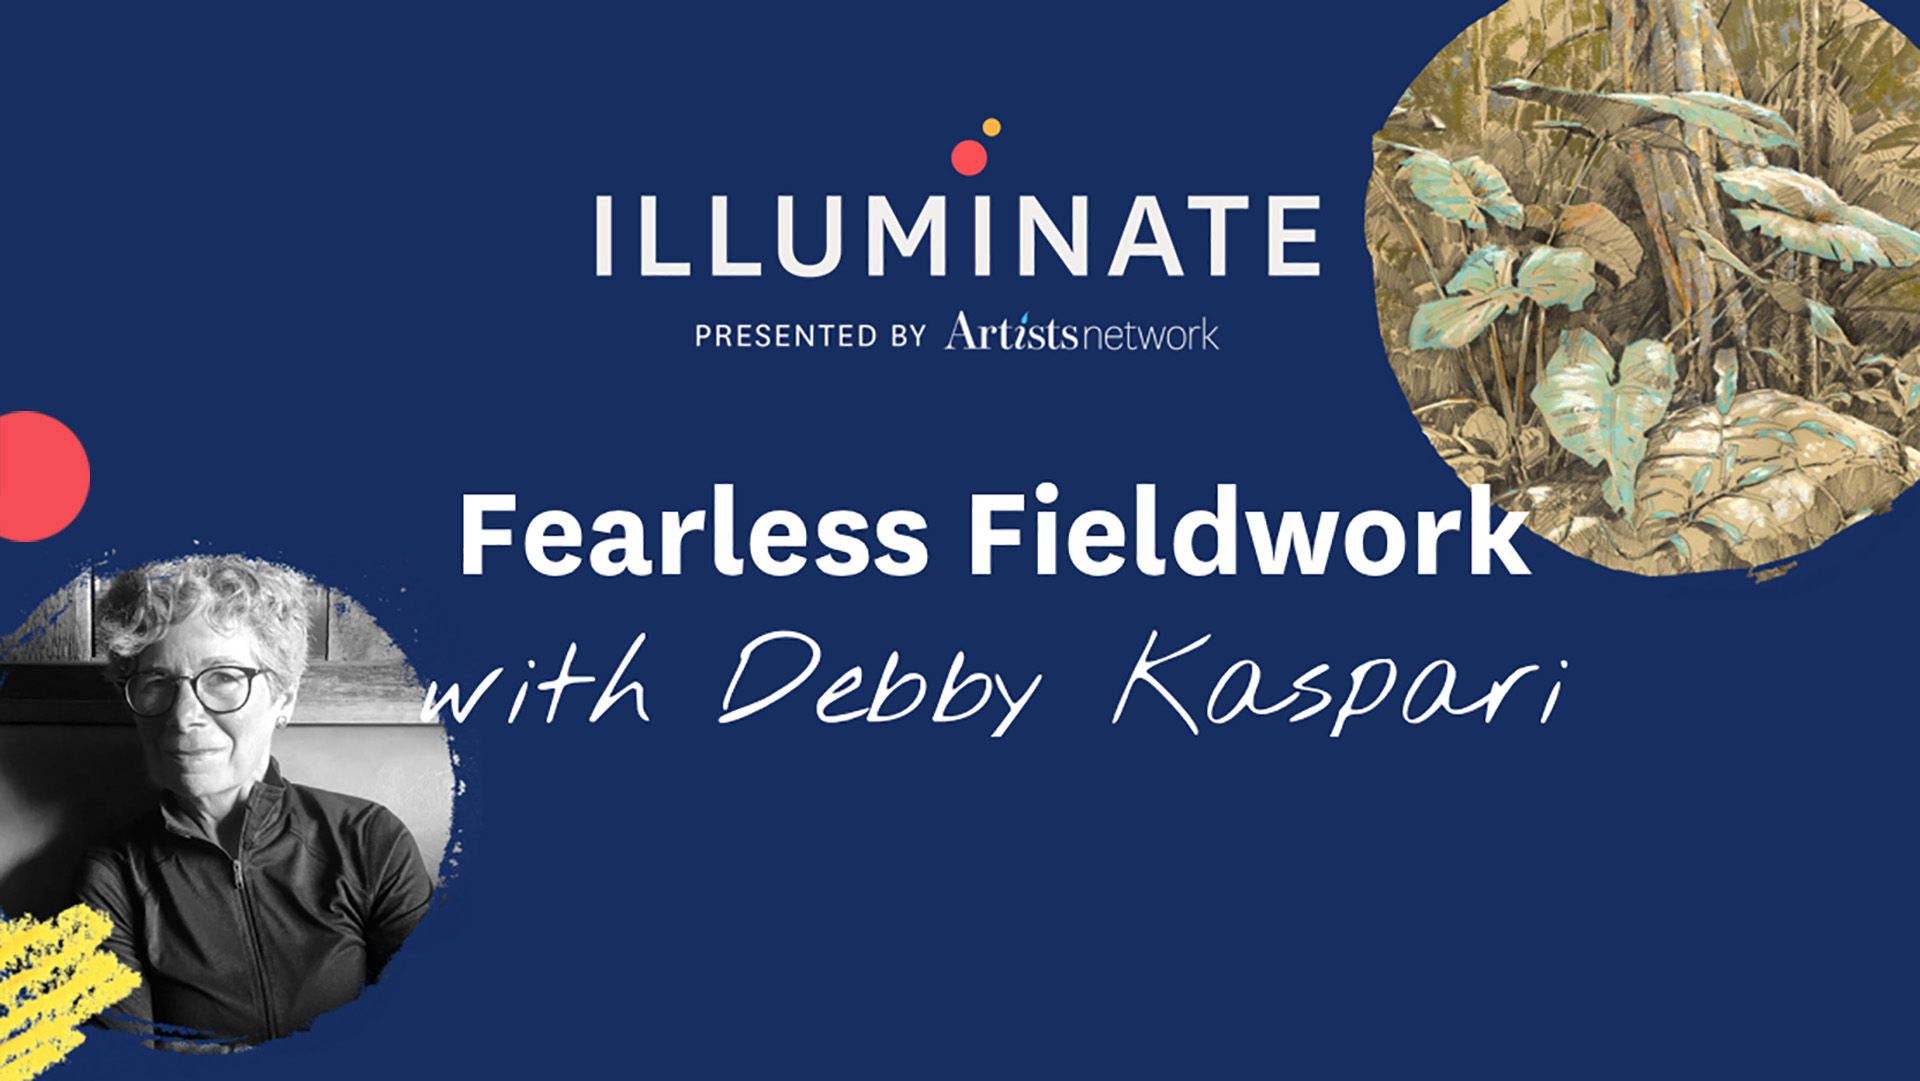 Fearless Fieldwork, with Debby Kaspari